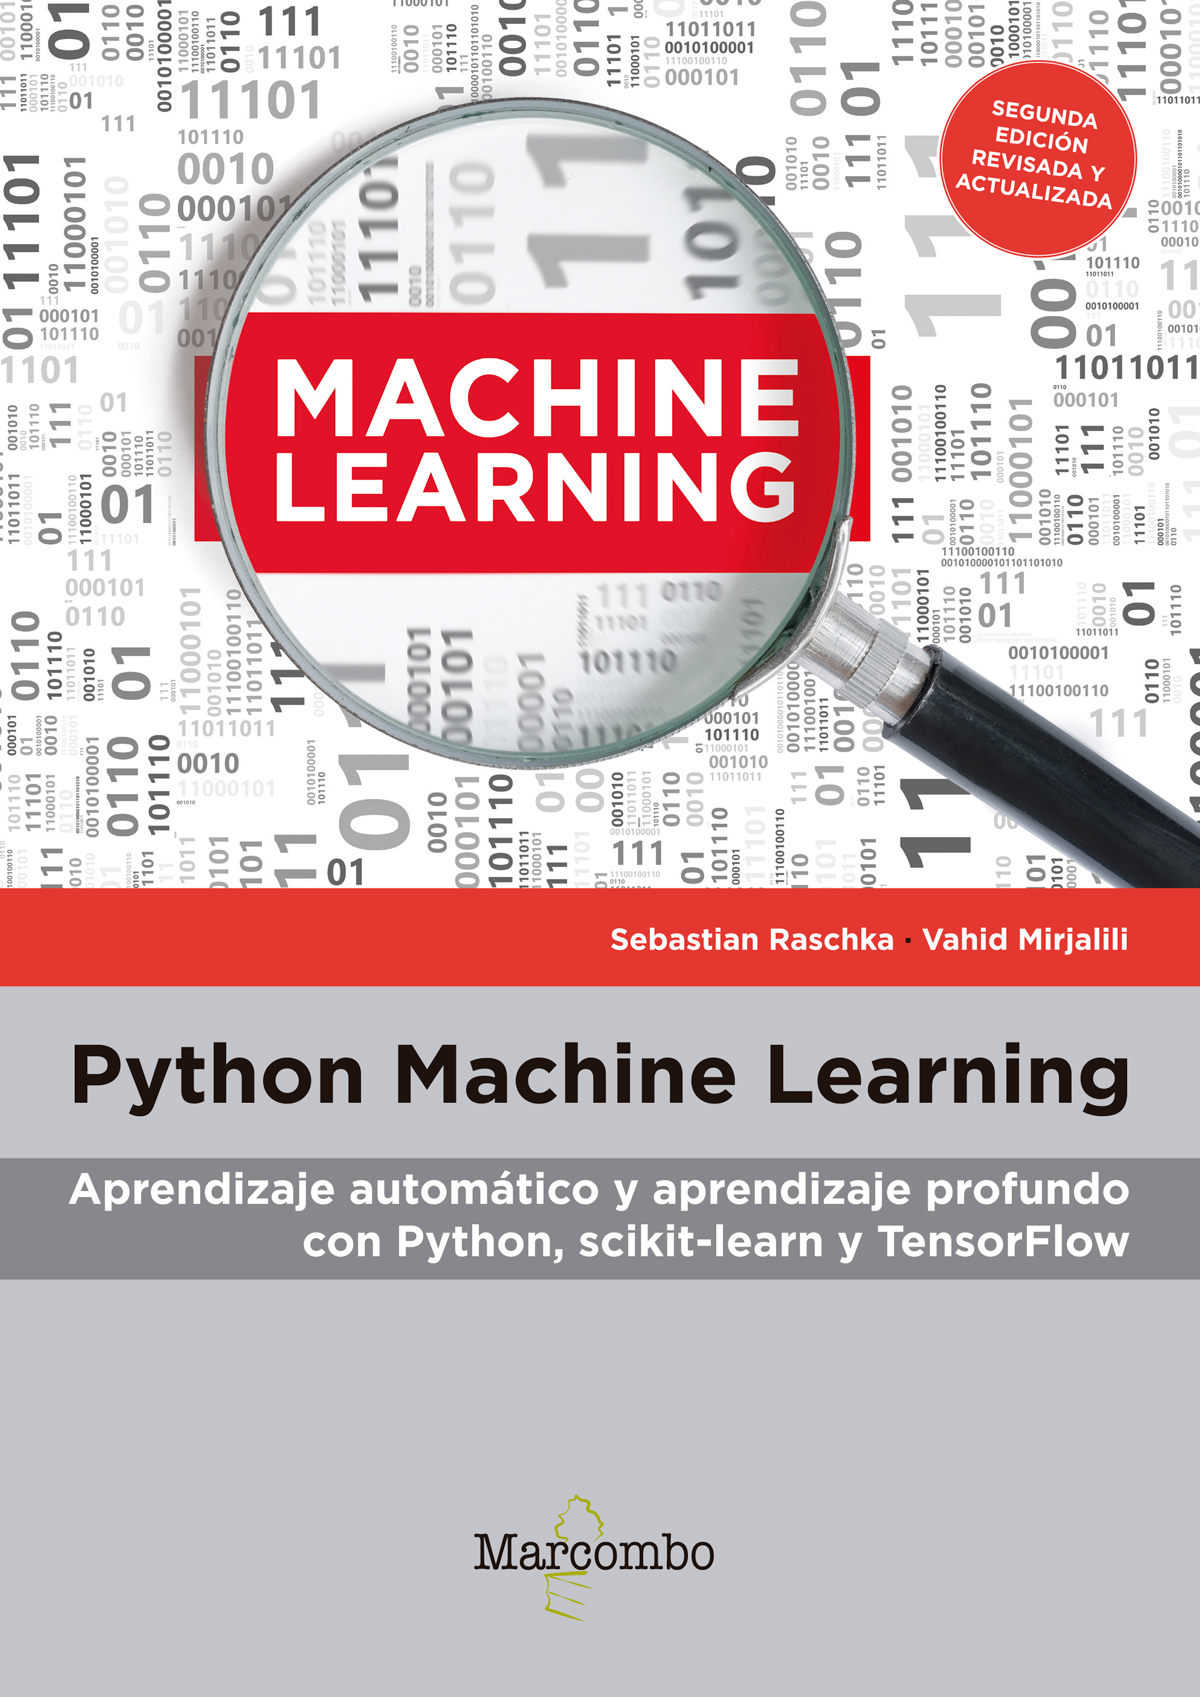 Python Machine Learning (9788426727206)